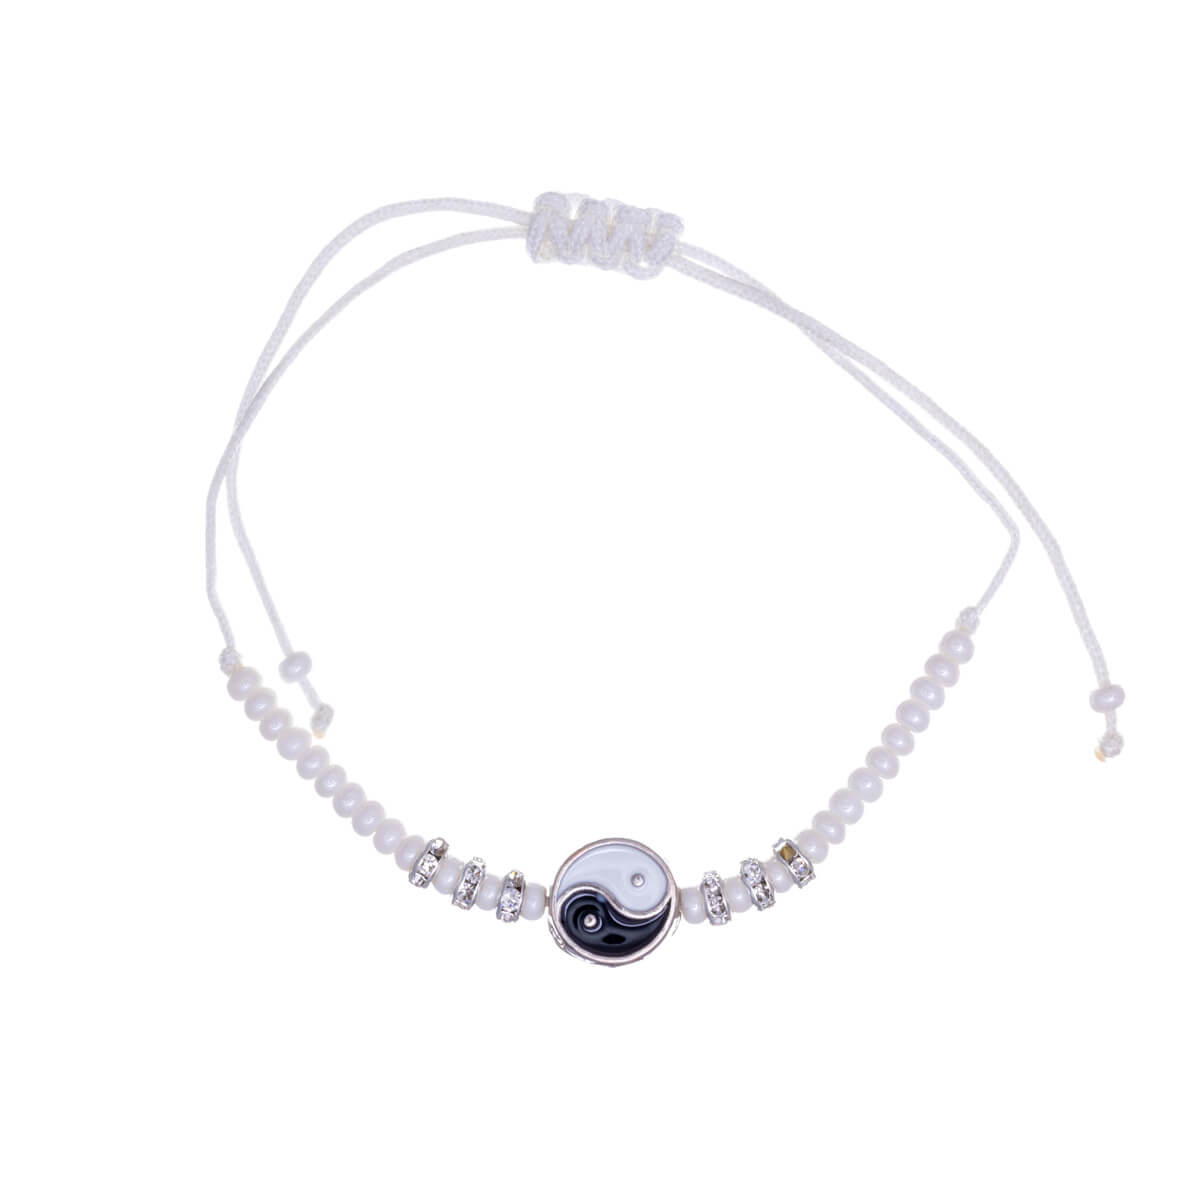 Yin yang friendship bracelet adjustable bead bracelet 2pcs